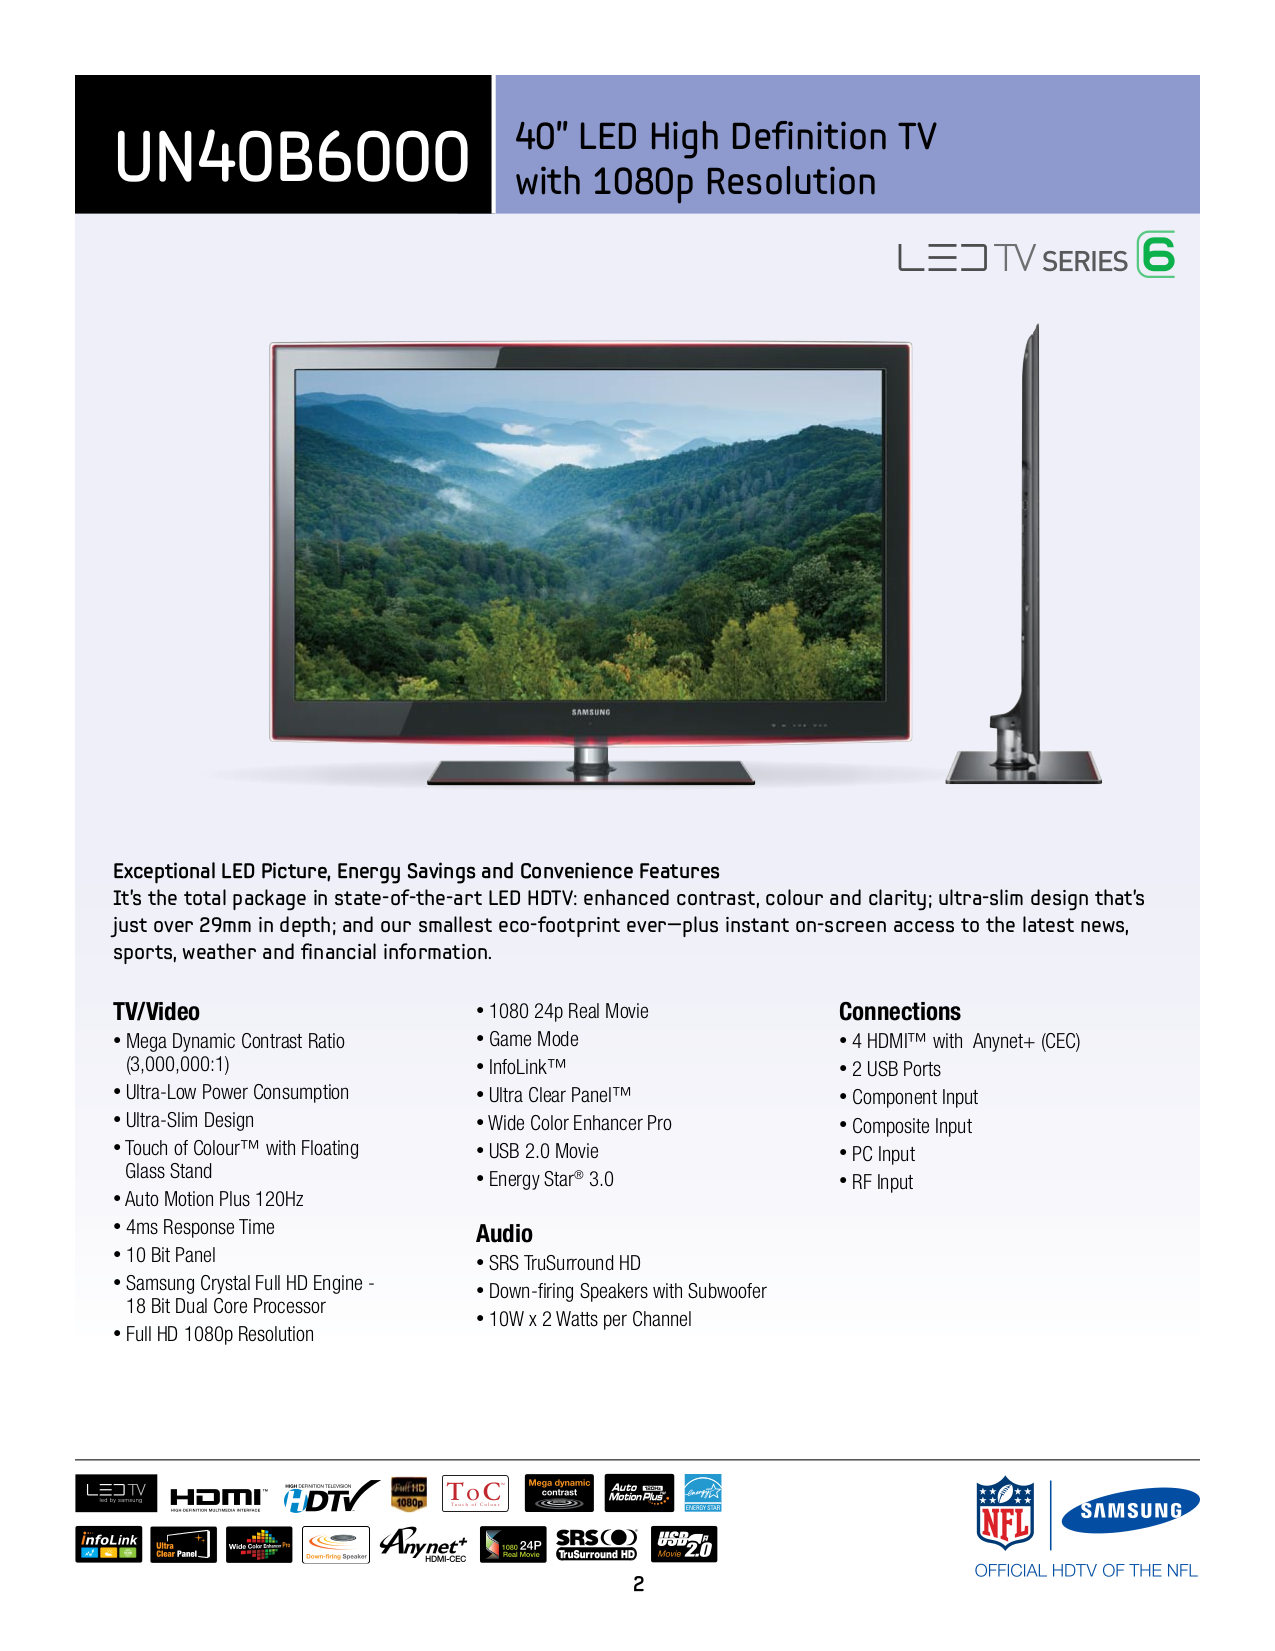 Download free pdf for Samsung UN40B6000 TV manual